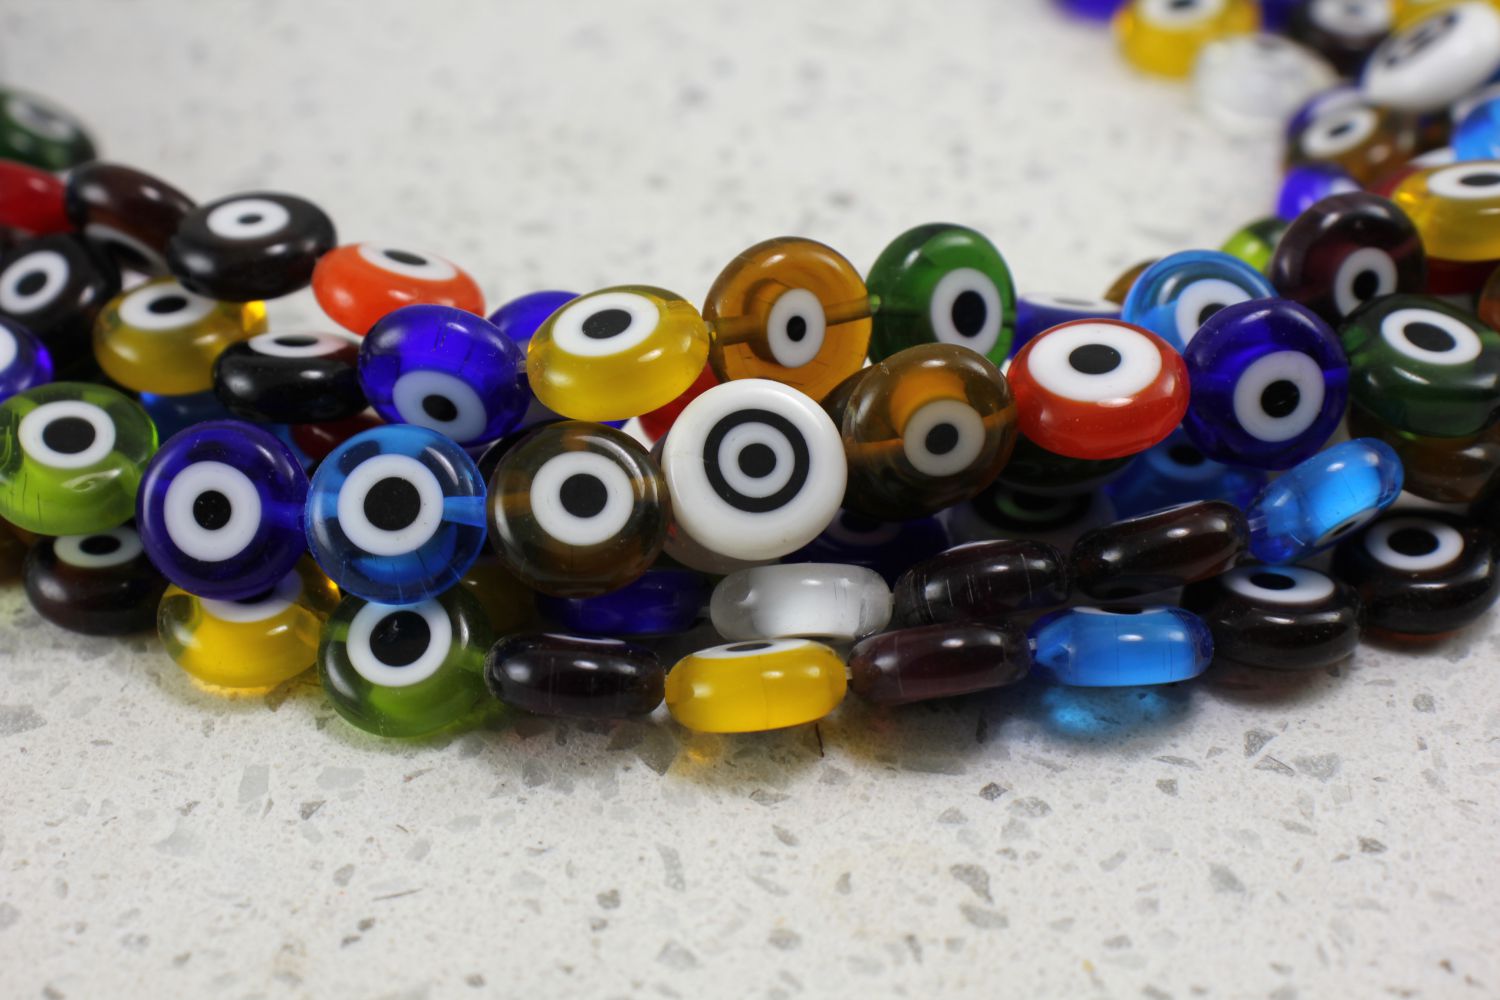 12mm-flat-round-evil-eye-strand-beads